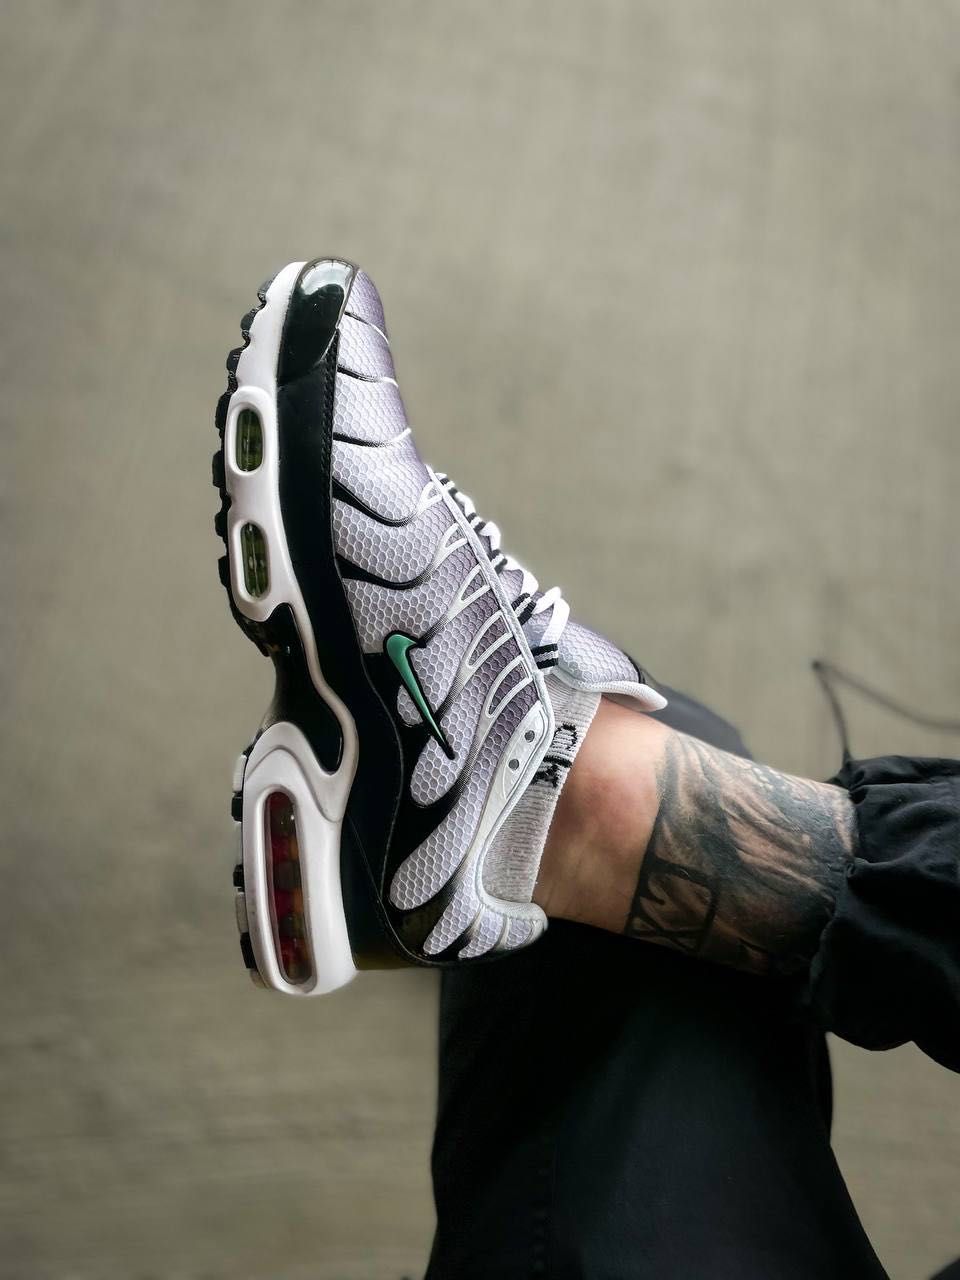 Мужские кроссовки Nike Tn+ "Black/White/Mint" Размеры 41-45